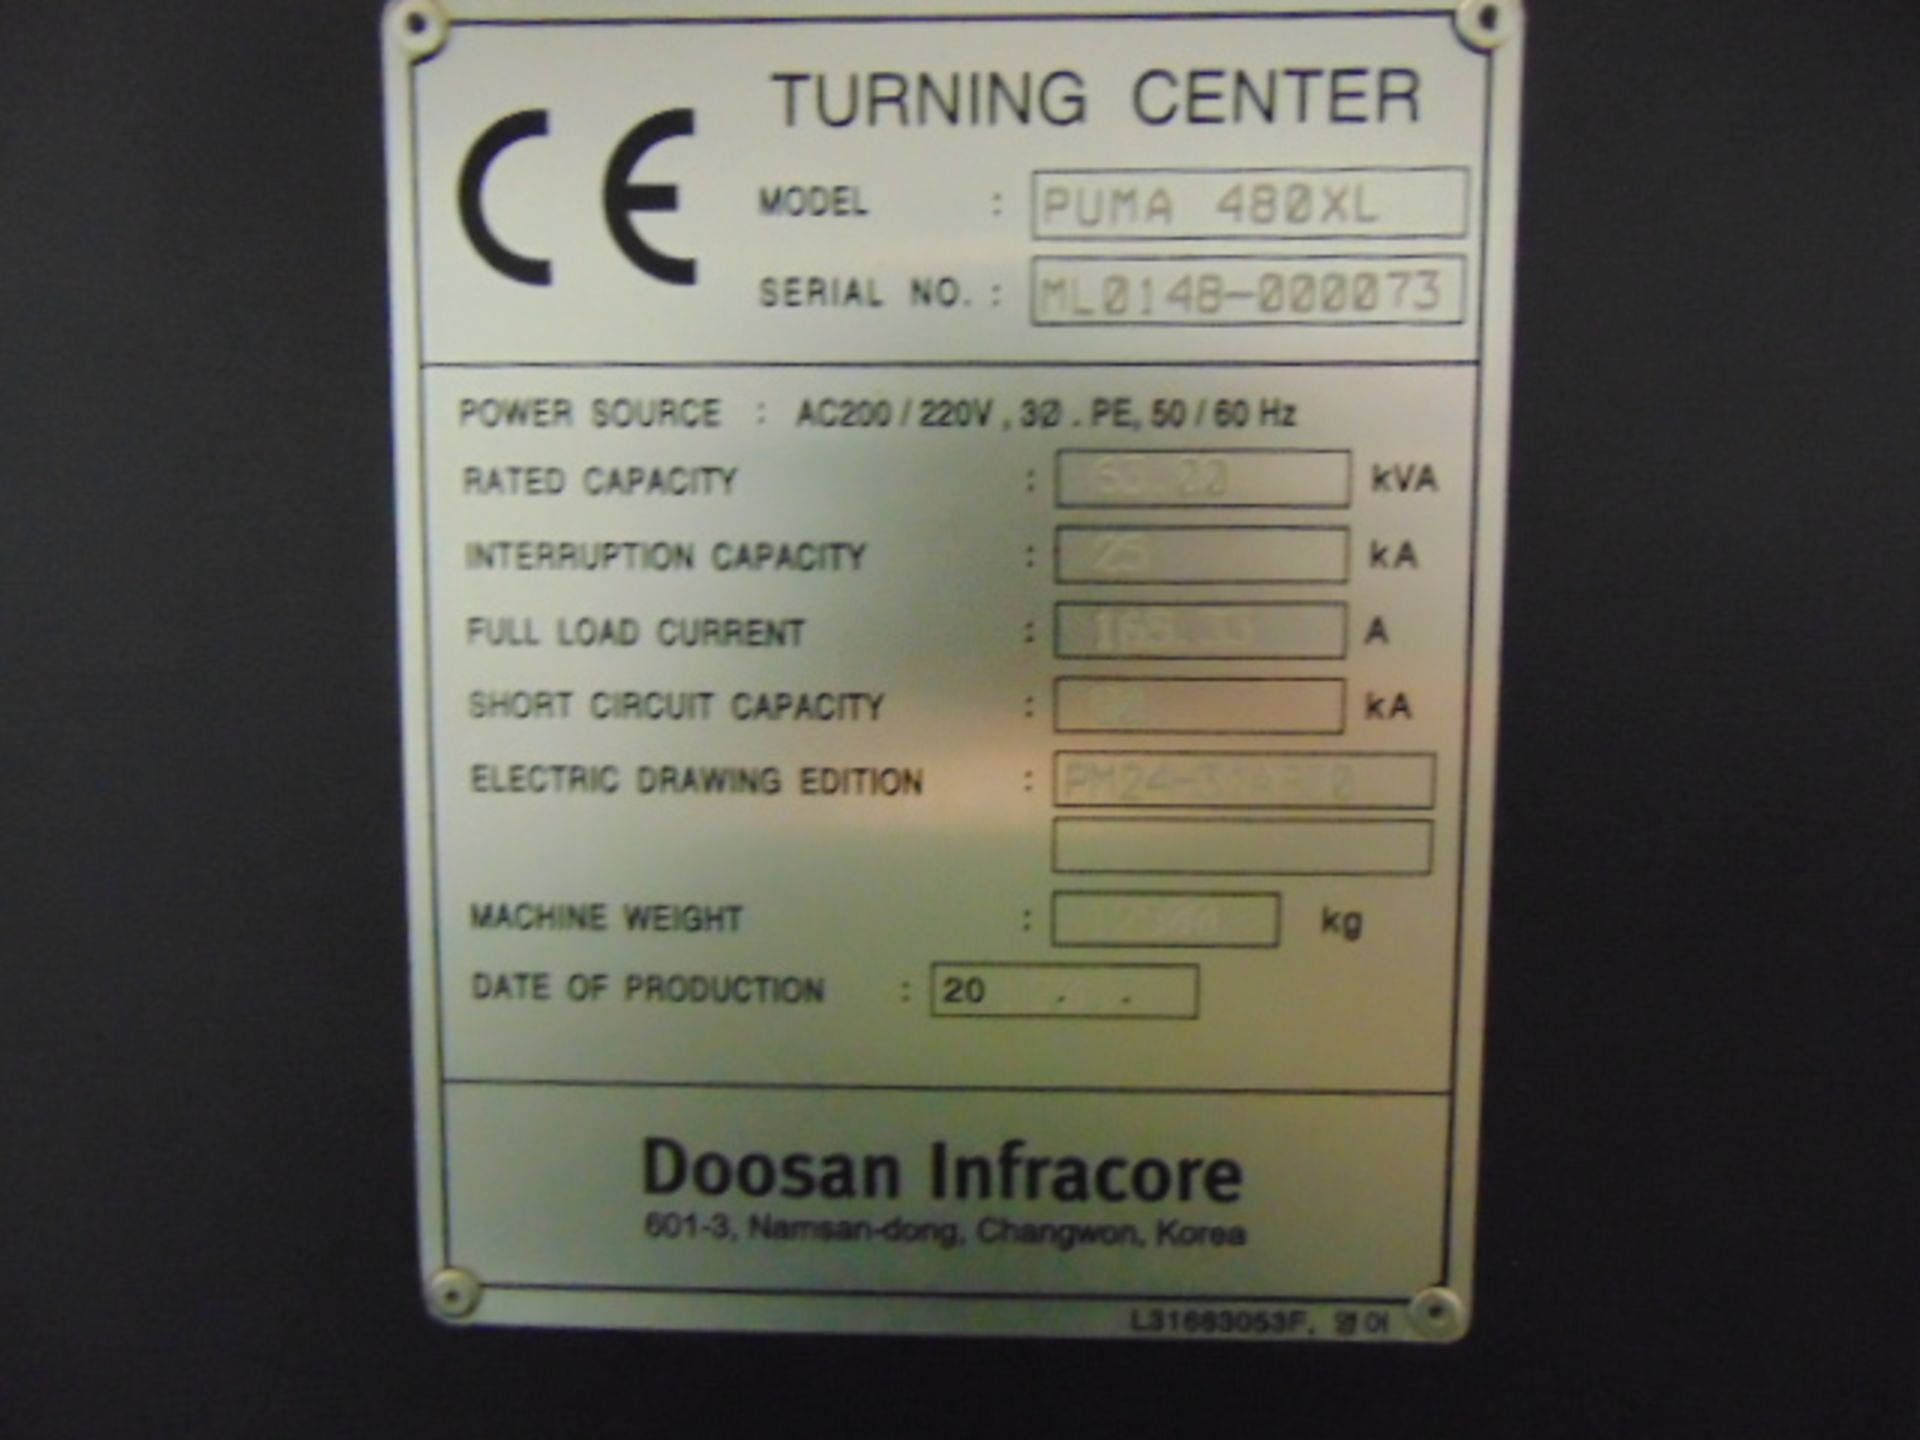 CNC LATHE, DOOSAN PUMA MDL. 480XL, new 1/2012, Fanuc 0i – Mdl. D CNC control, 35'4" swing over - Image 14 of 14